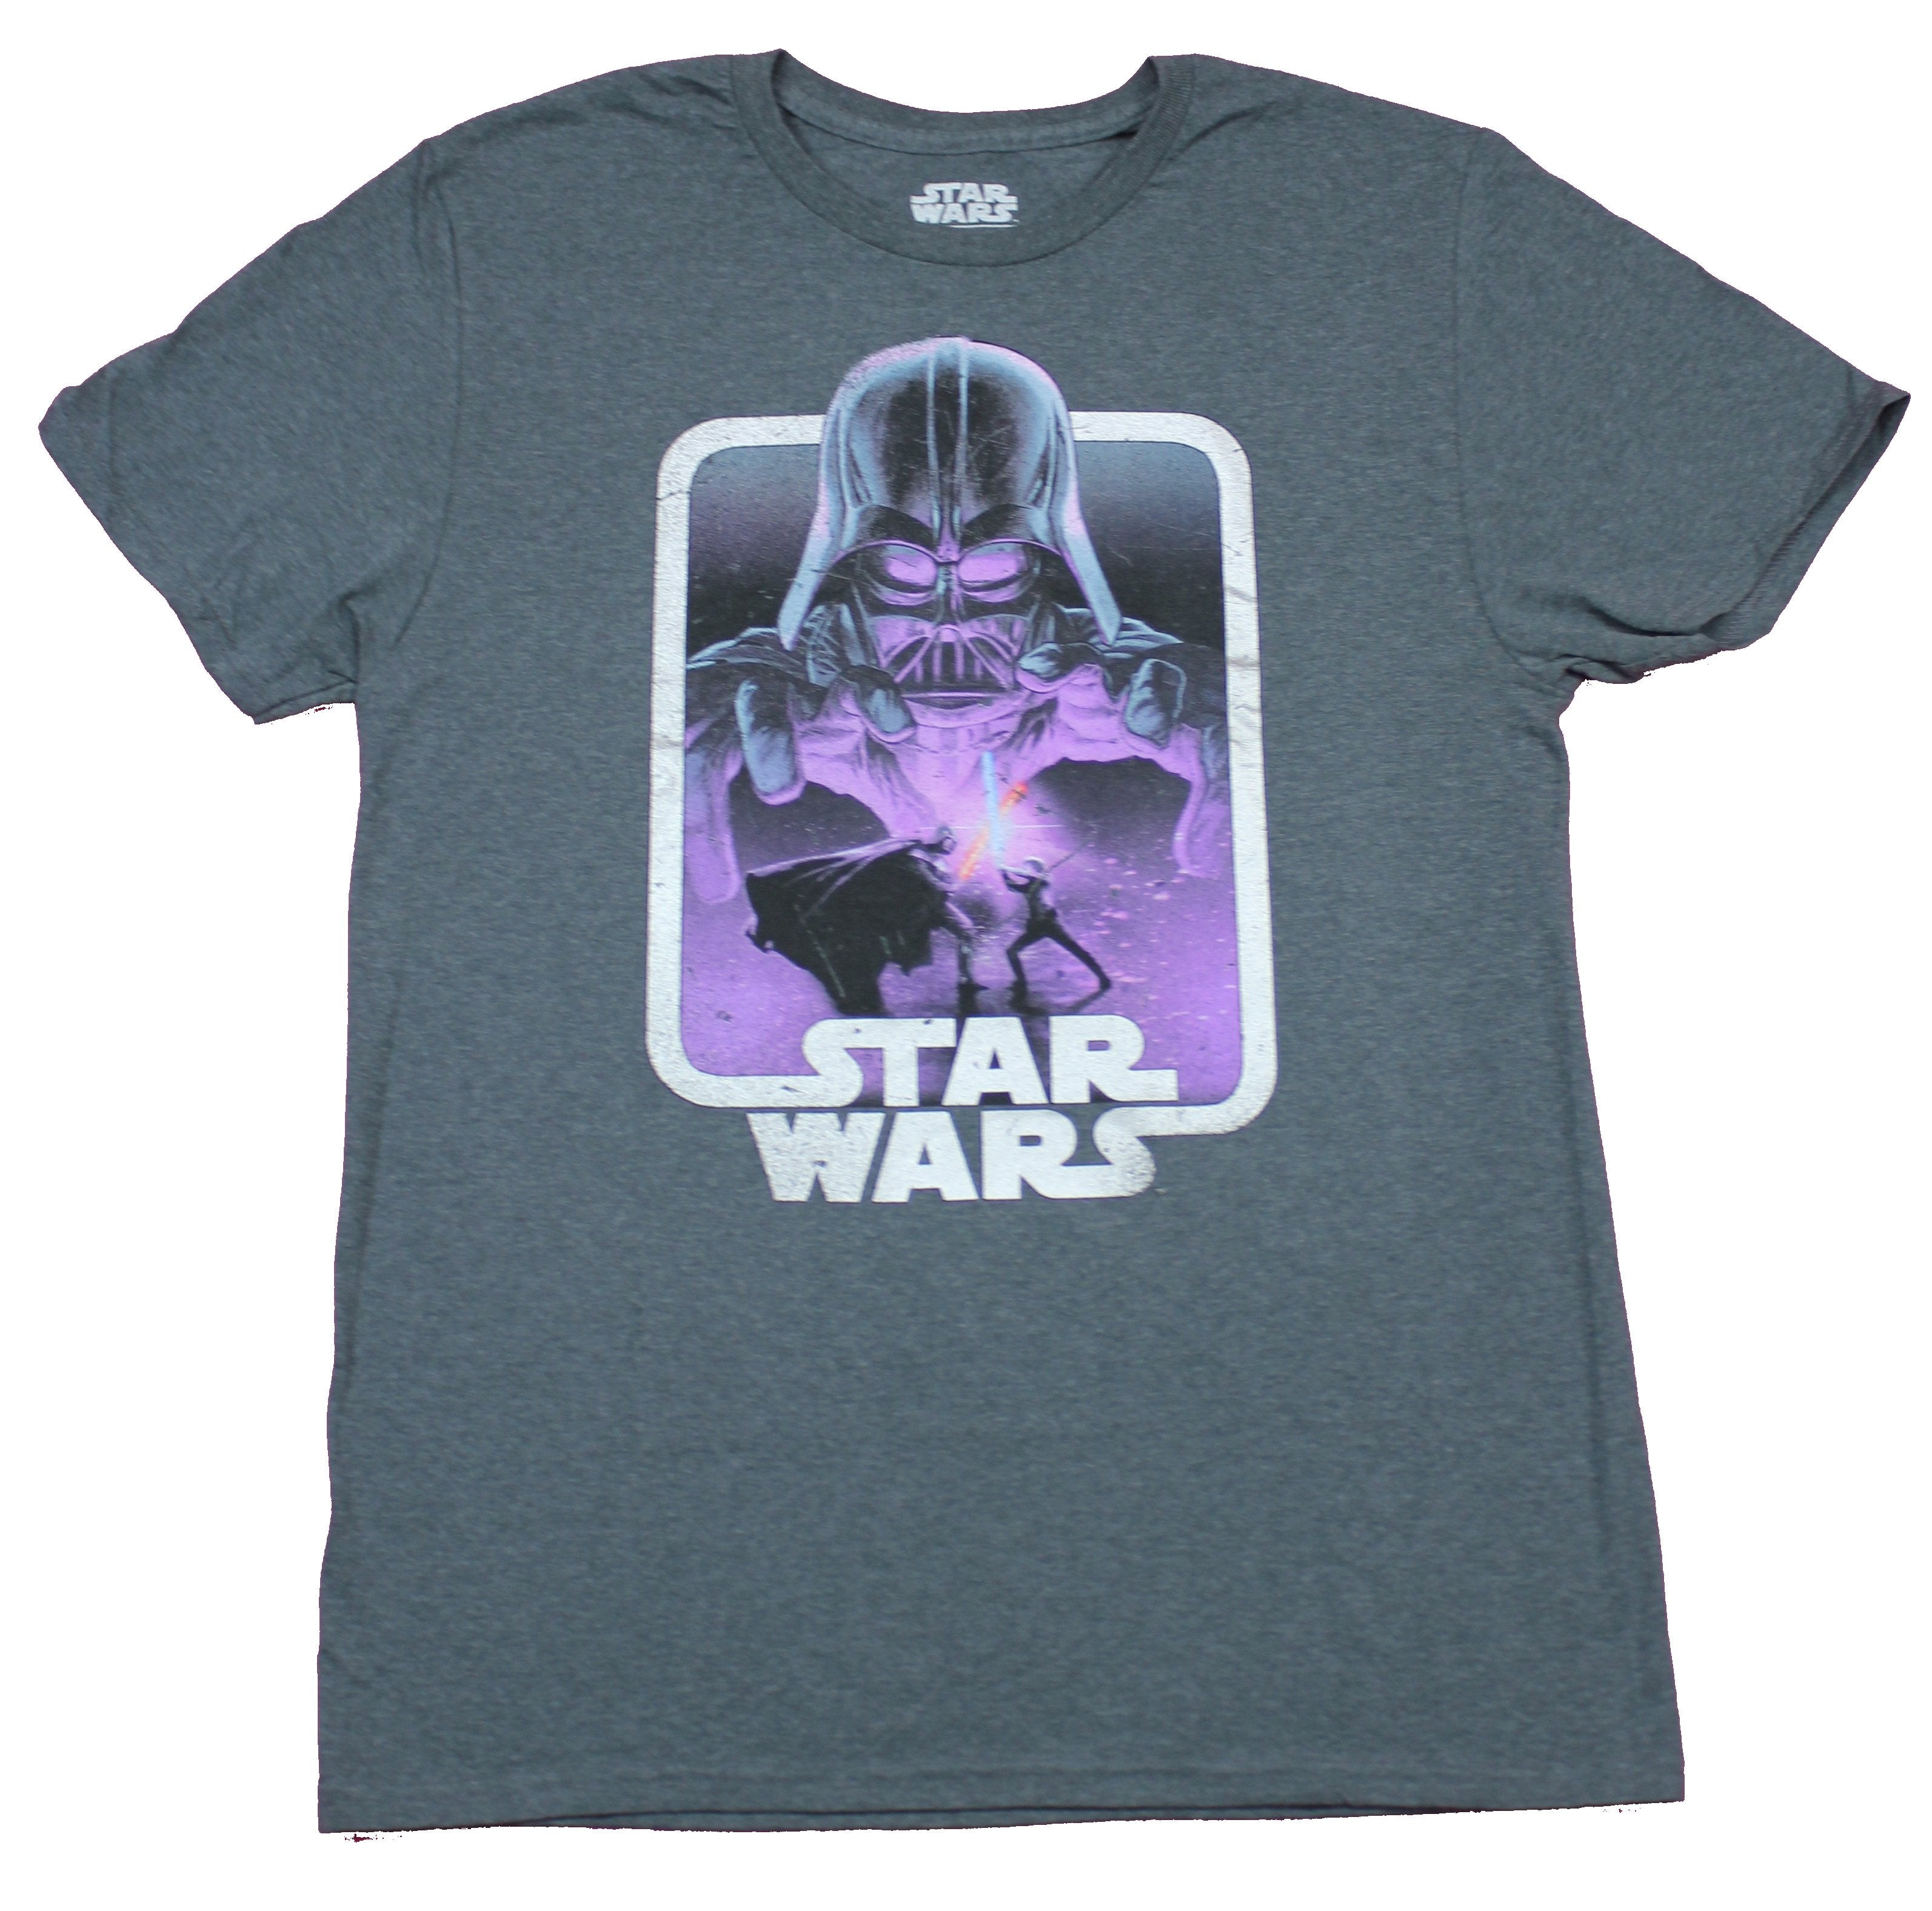 Star Wars Mens T-Shirt  - Retro Styled Lightsaber Battle Under Darth Vader Hands